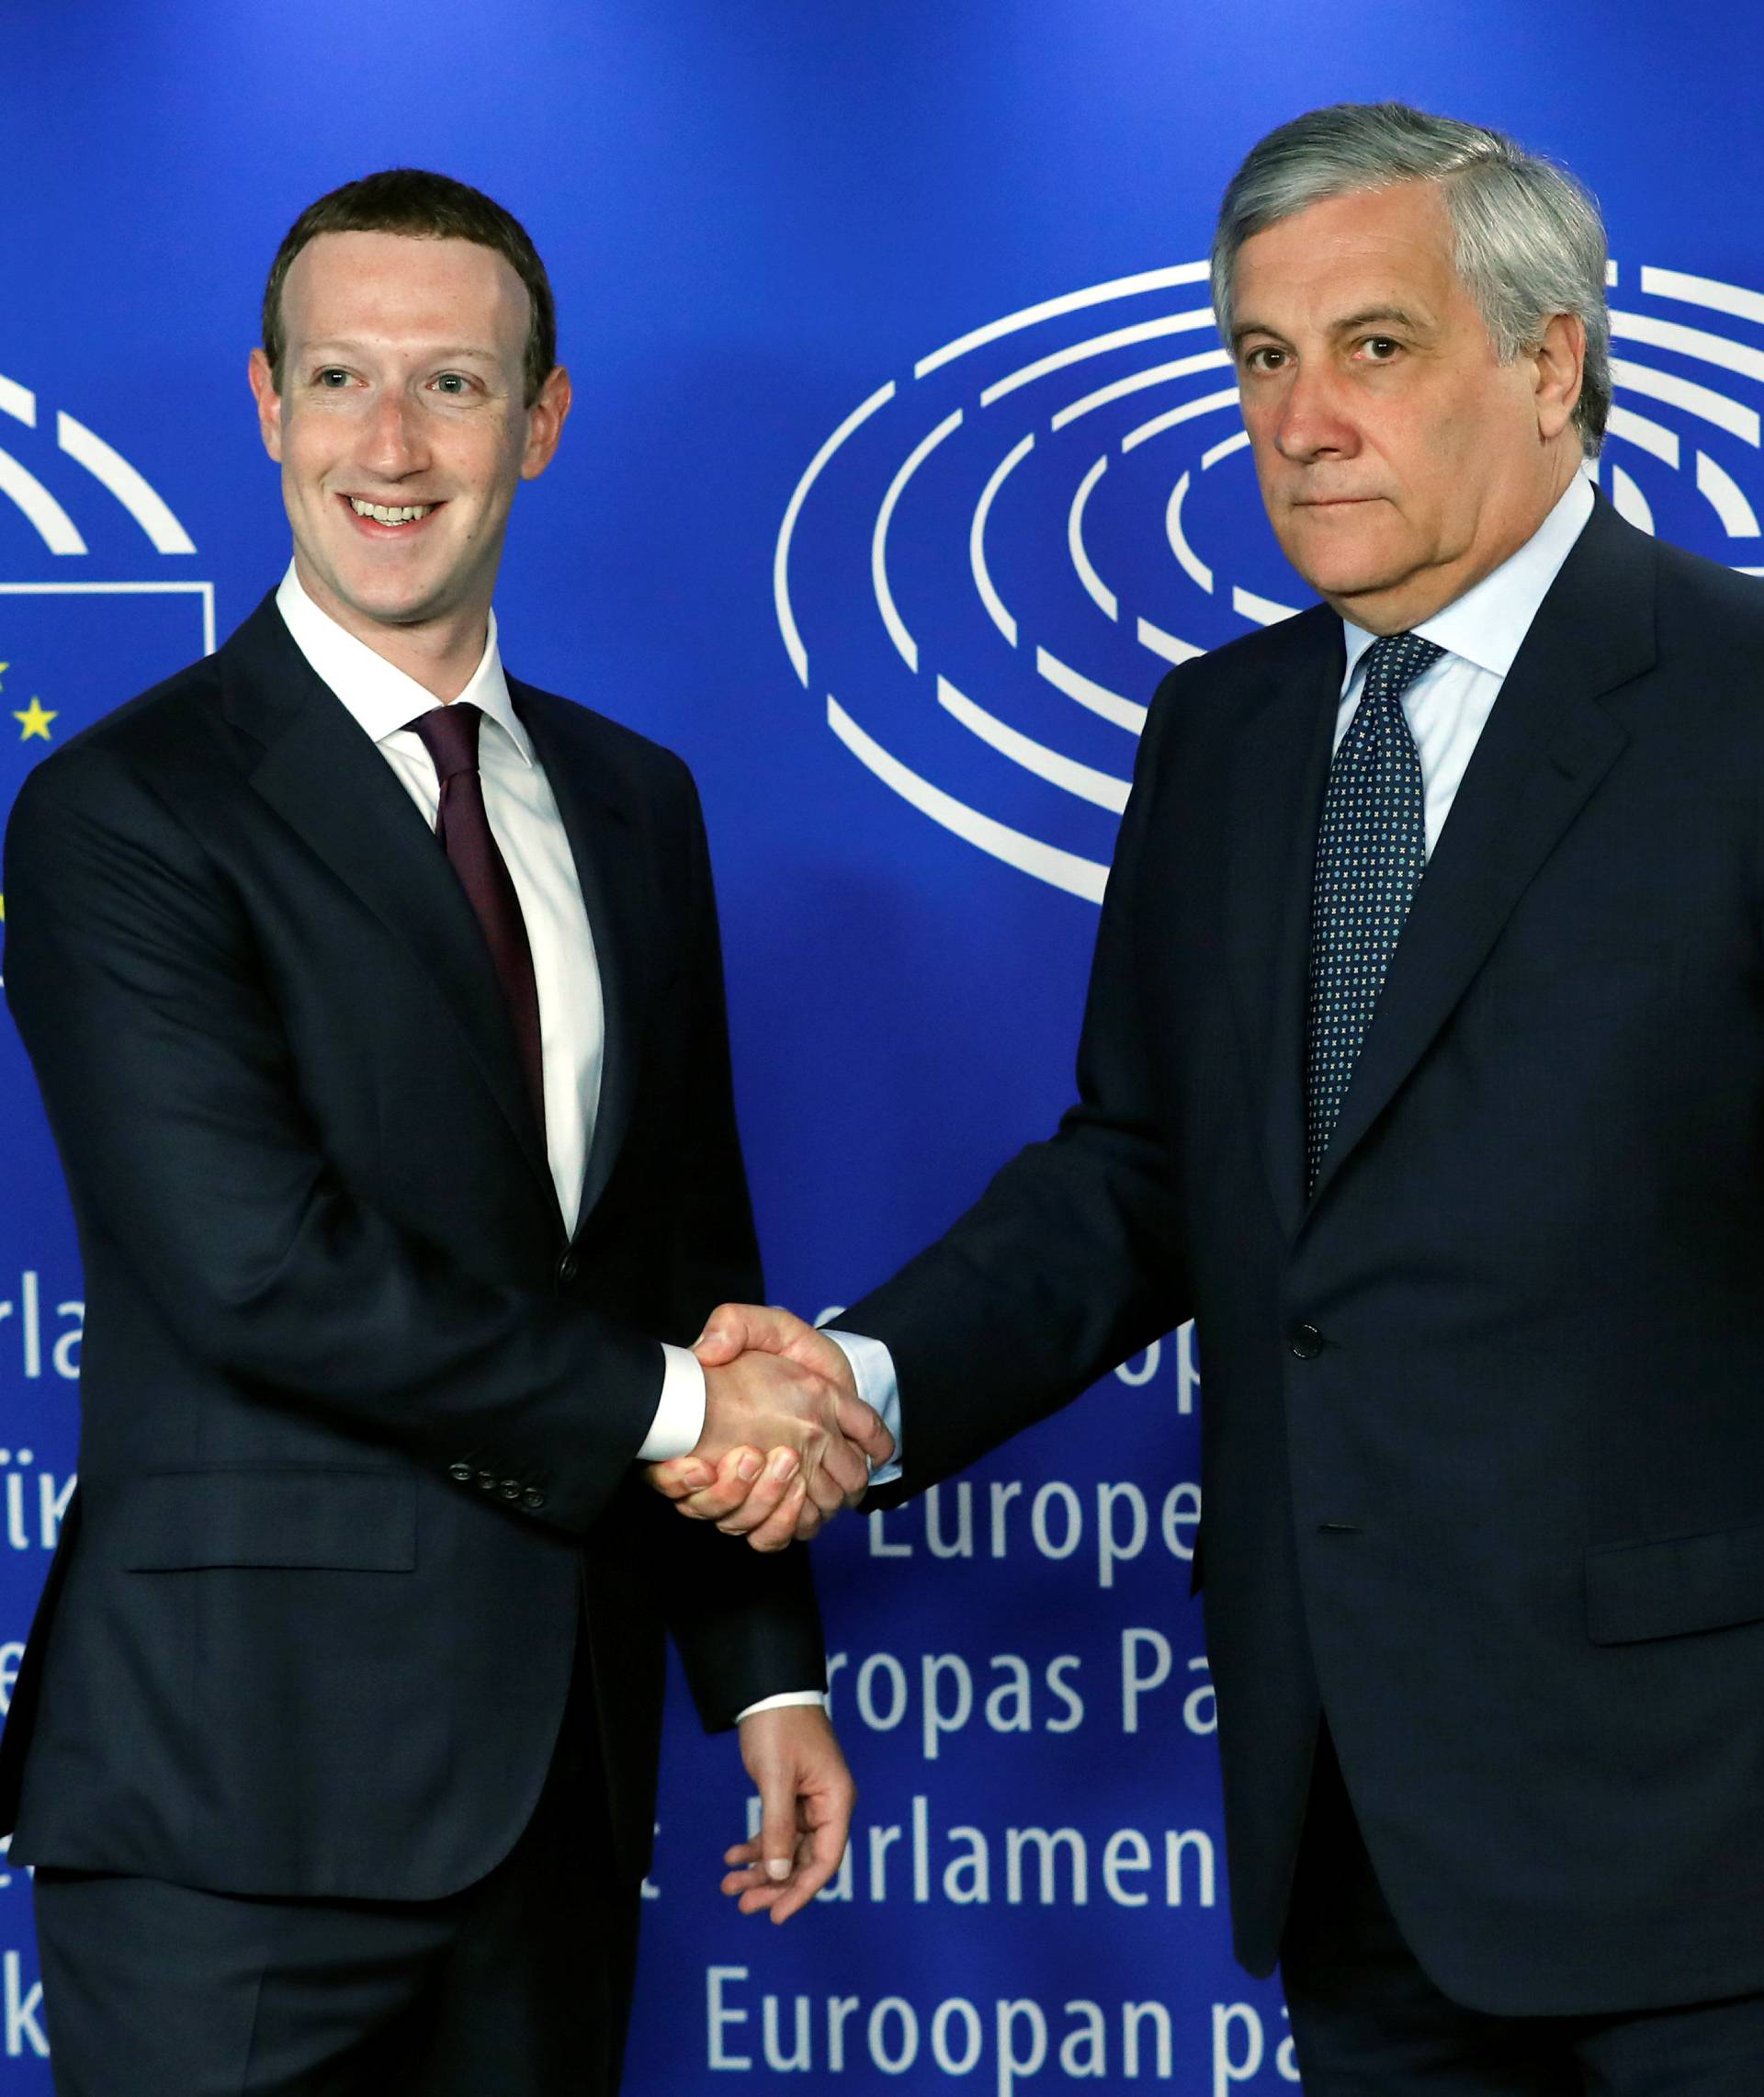 Facebook's CEO Mark Zuckerberg shakes hands with European Parliament President Antonio Tajani at the European Parliament in Brussels